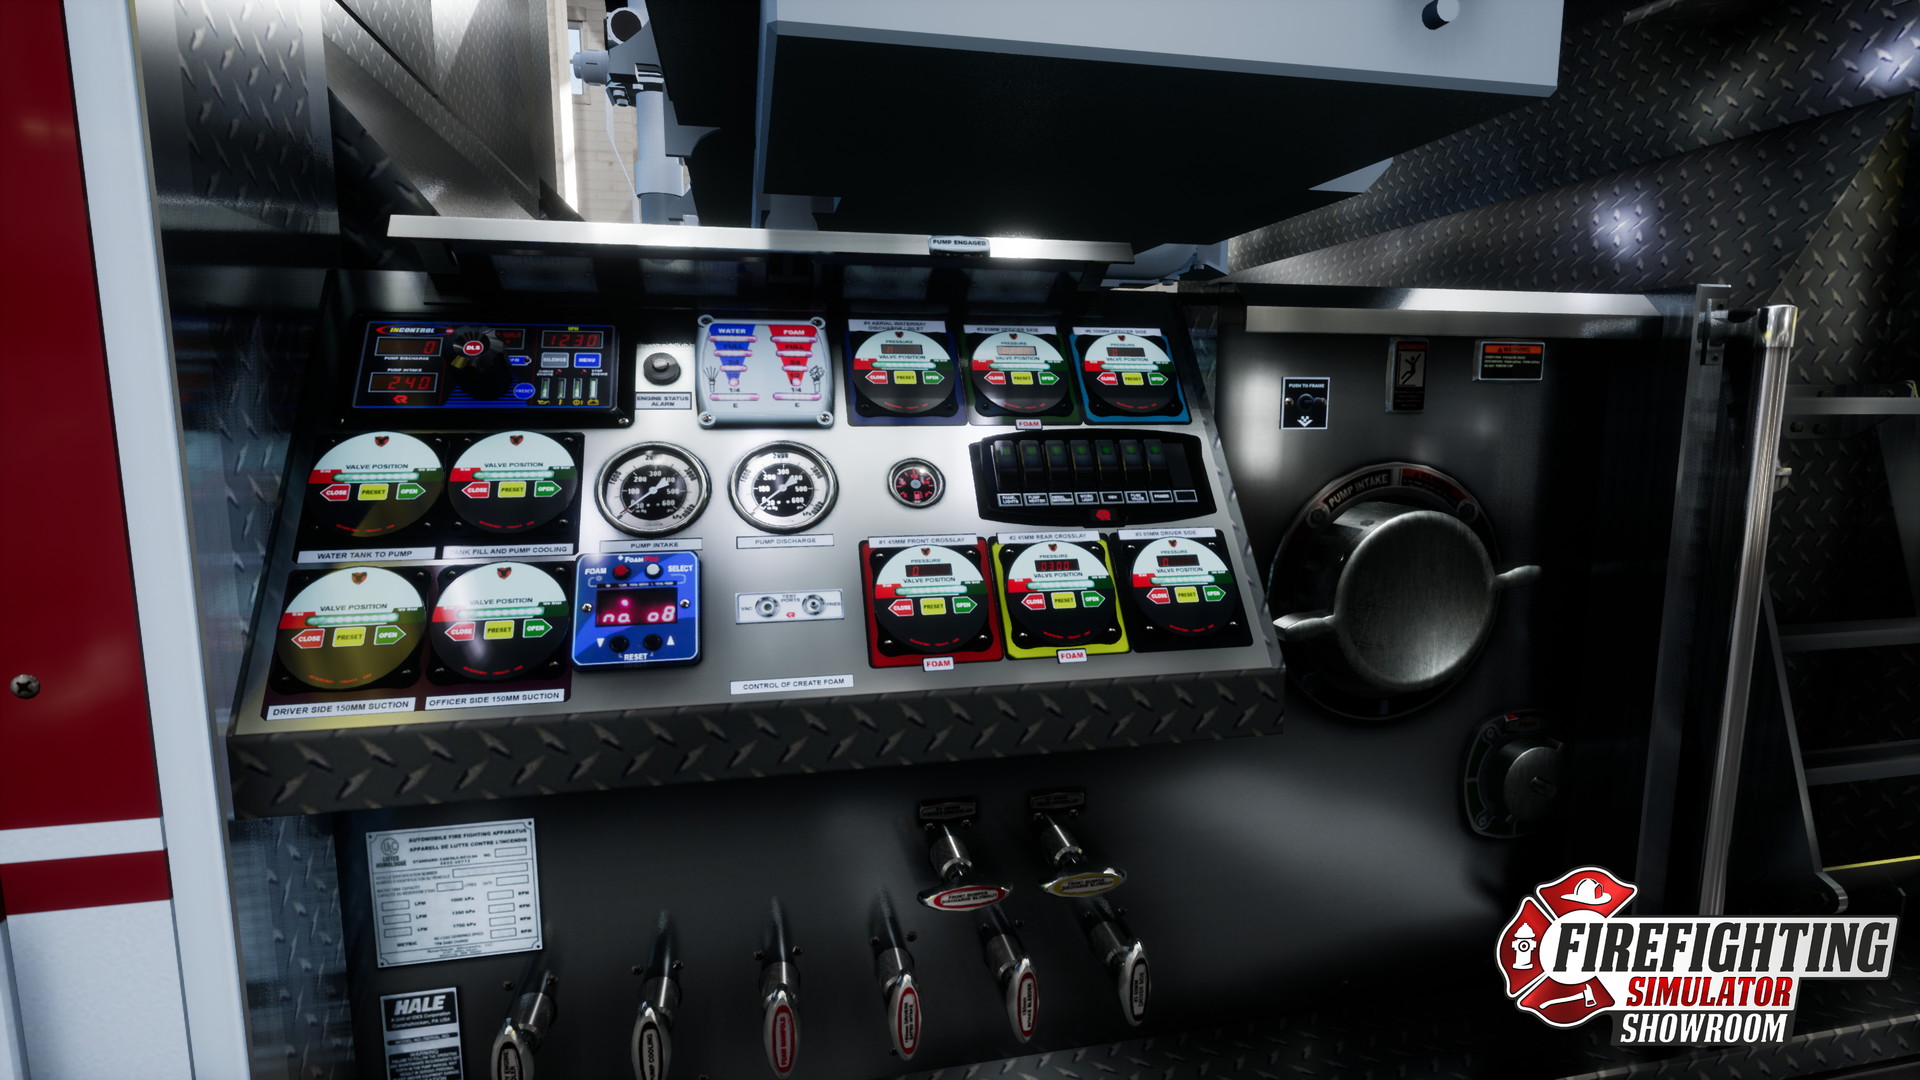 Firefighting Simulator: The Squad - screenshot 11